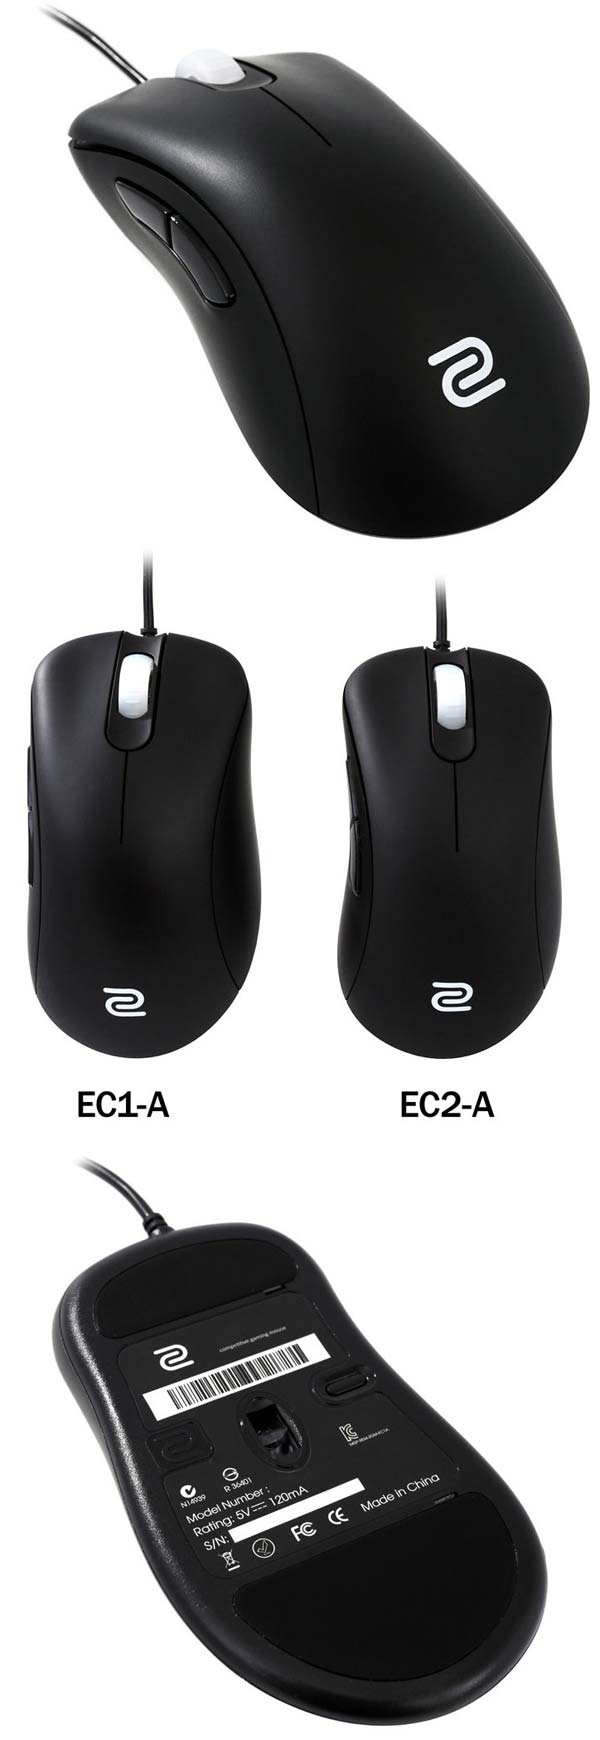 На фото мышки Zowie EC1-A и EC2-A